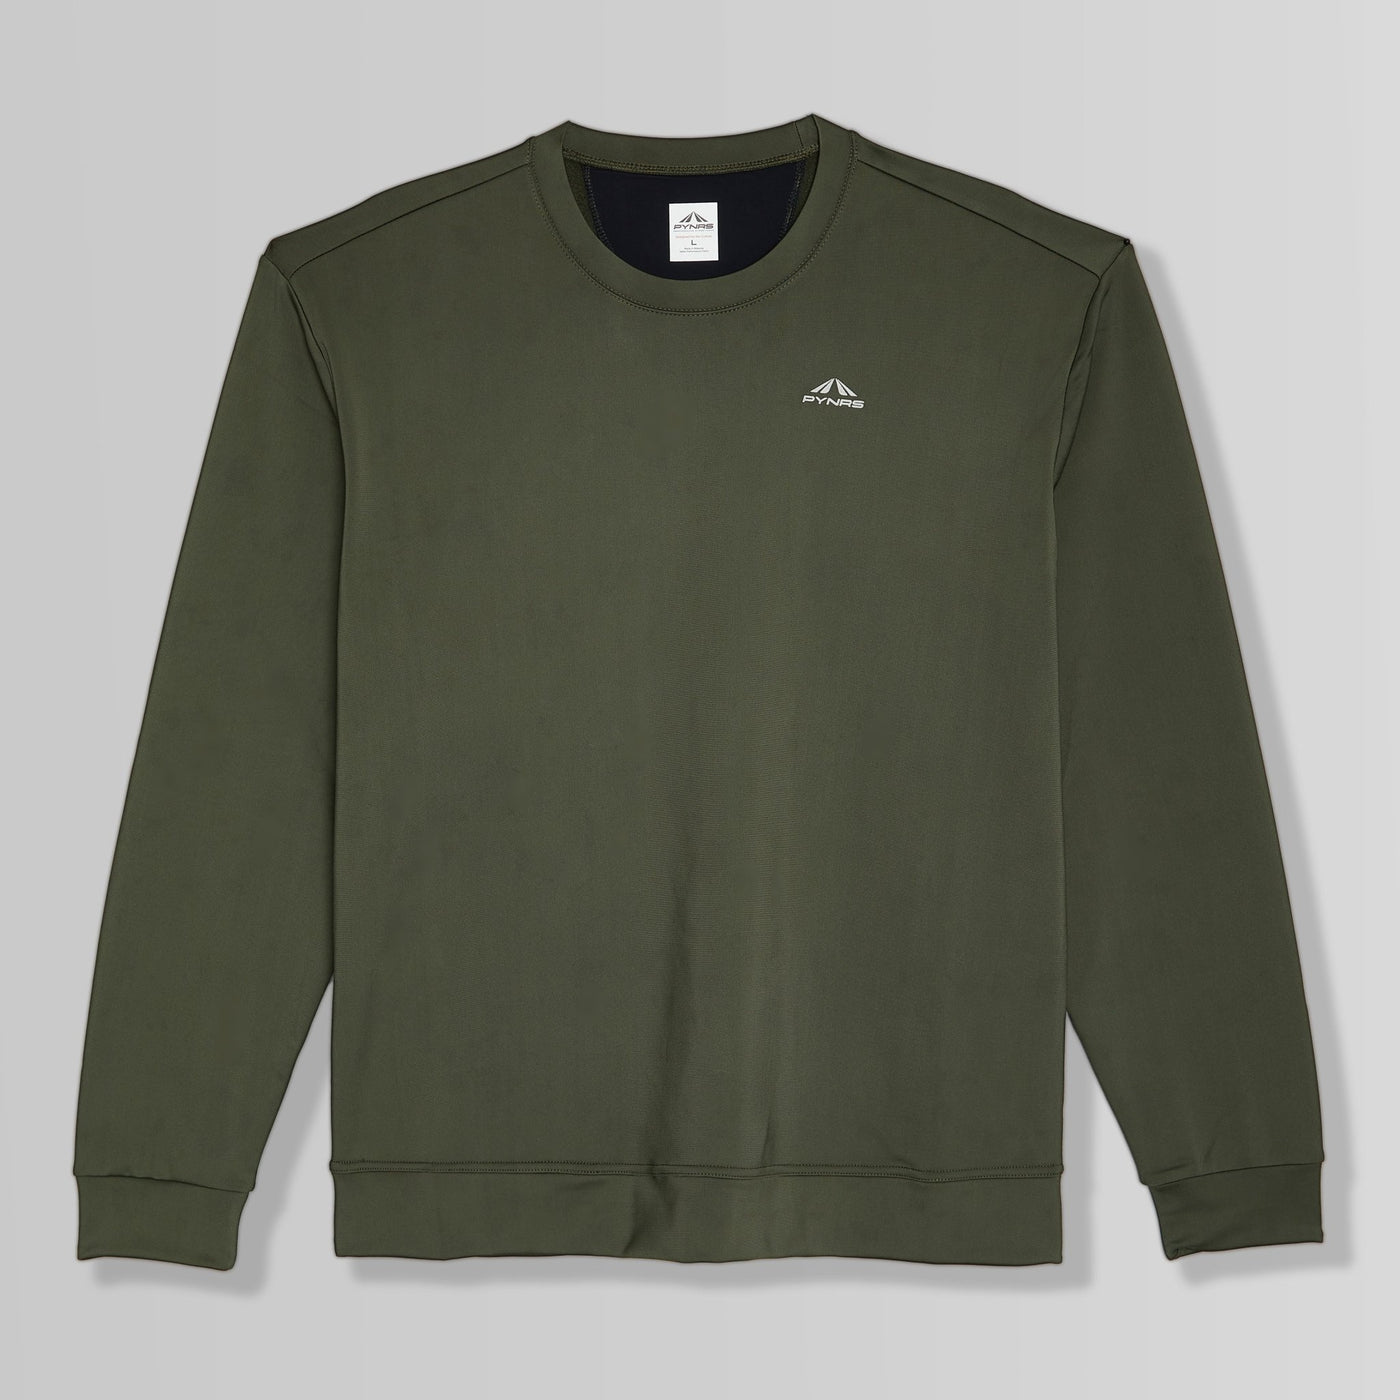 '23 Draper Running Sweatshirt - Deep Olive - PYNRS Performance Streetwear